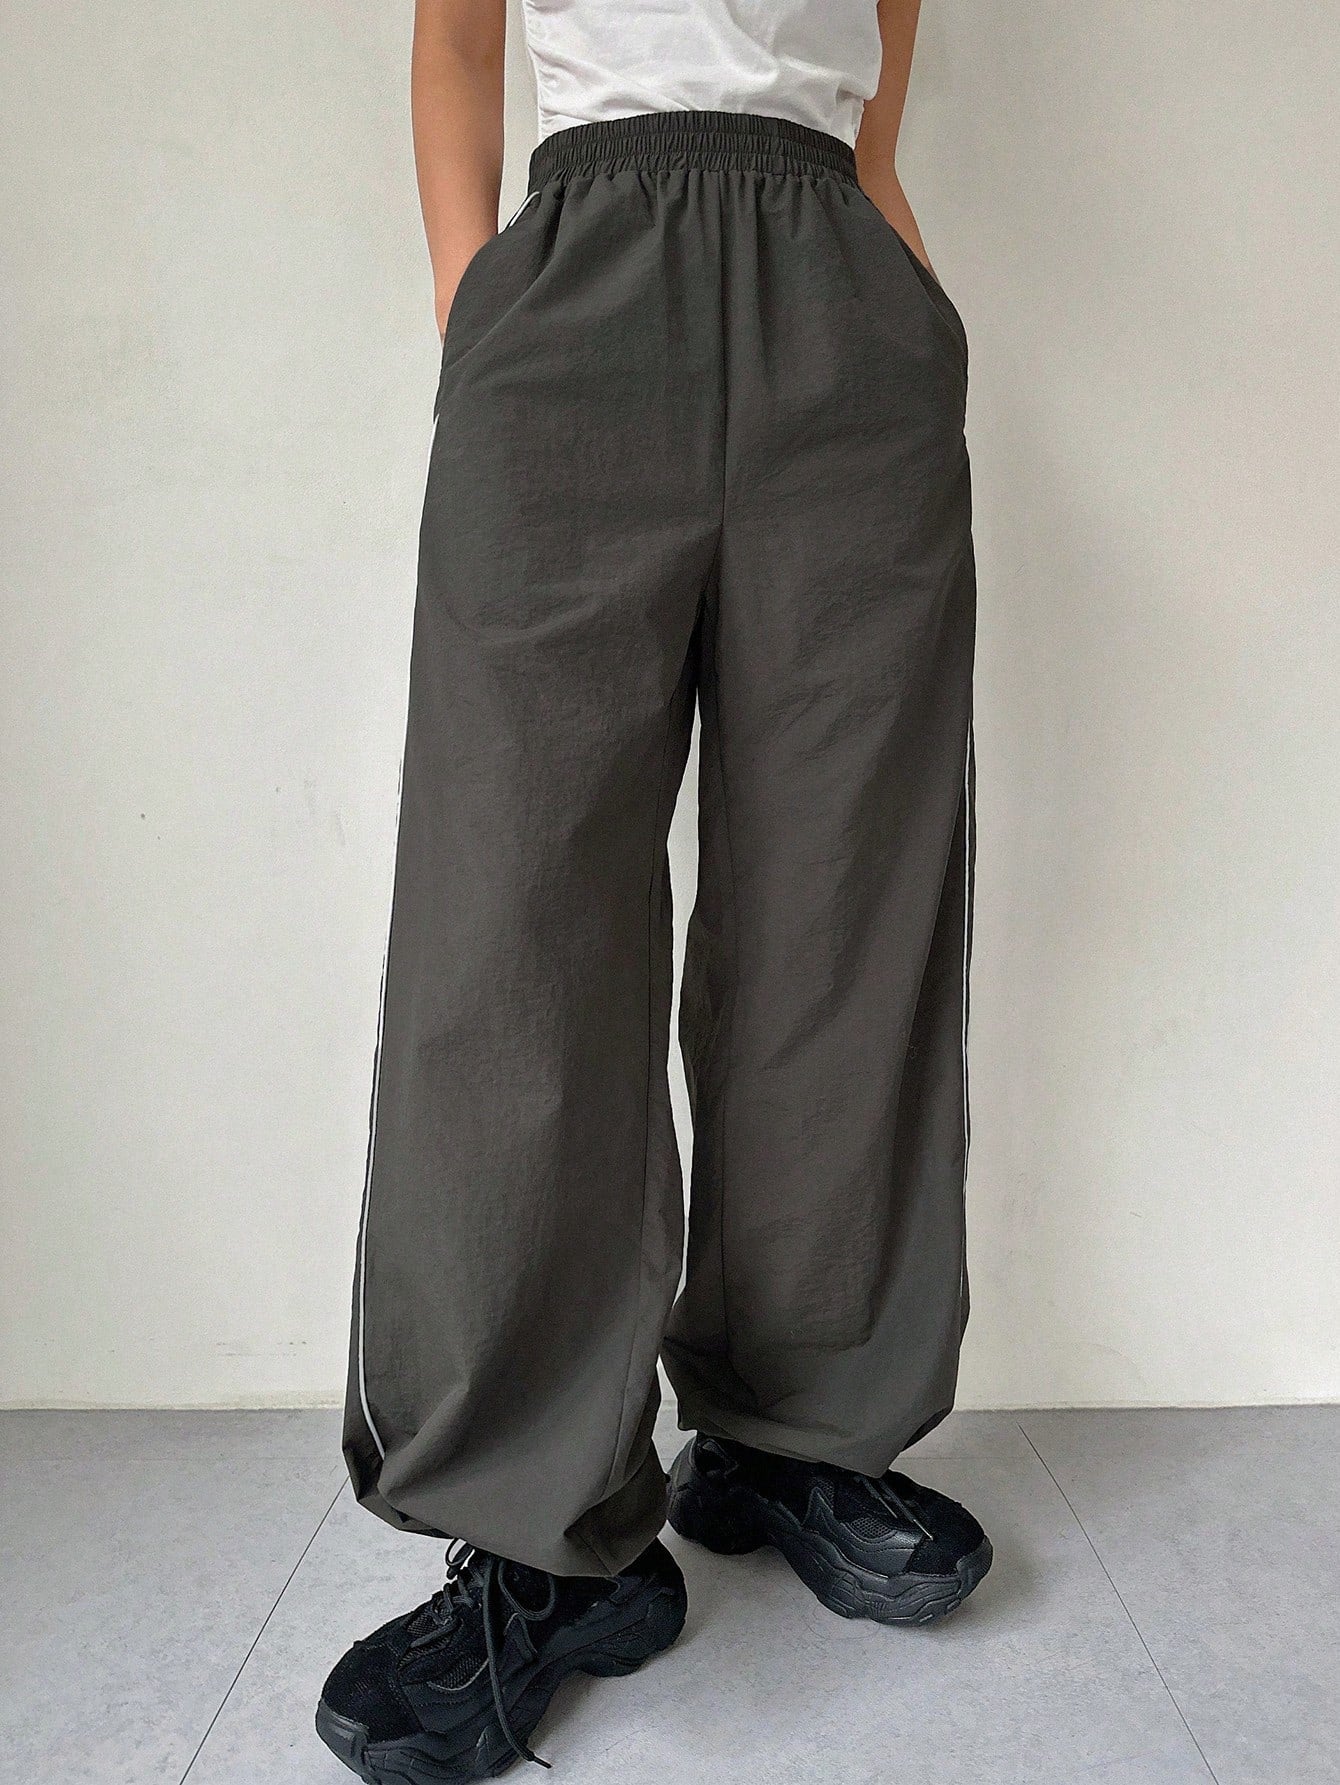 DAZY Women'S Colorblock Elastic Waist Cuffed Parachute Pants